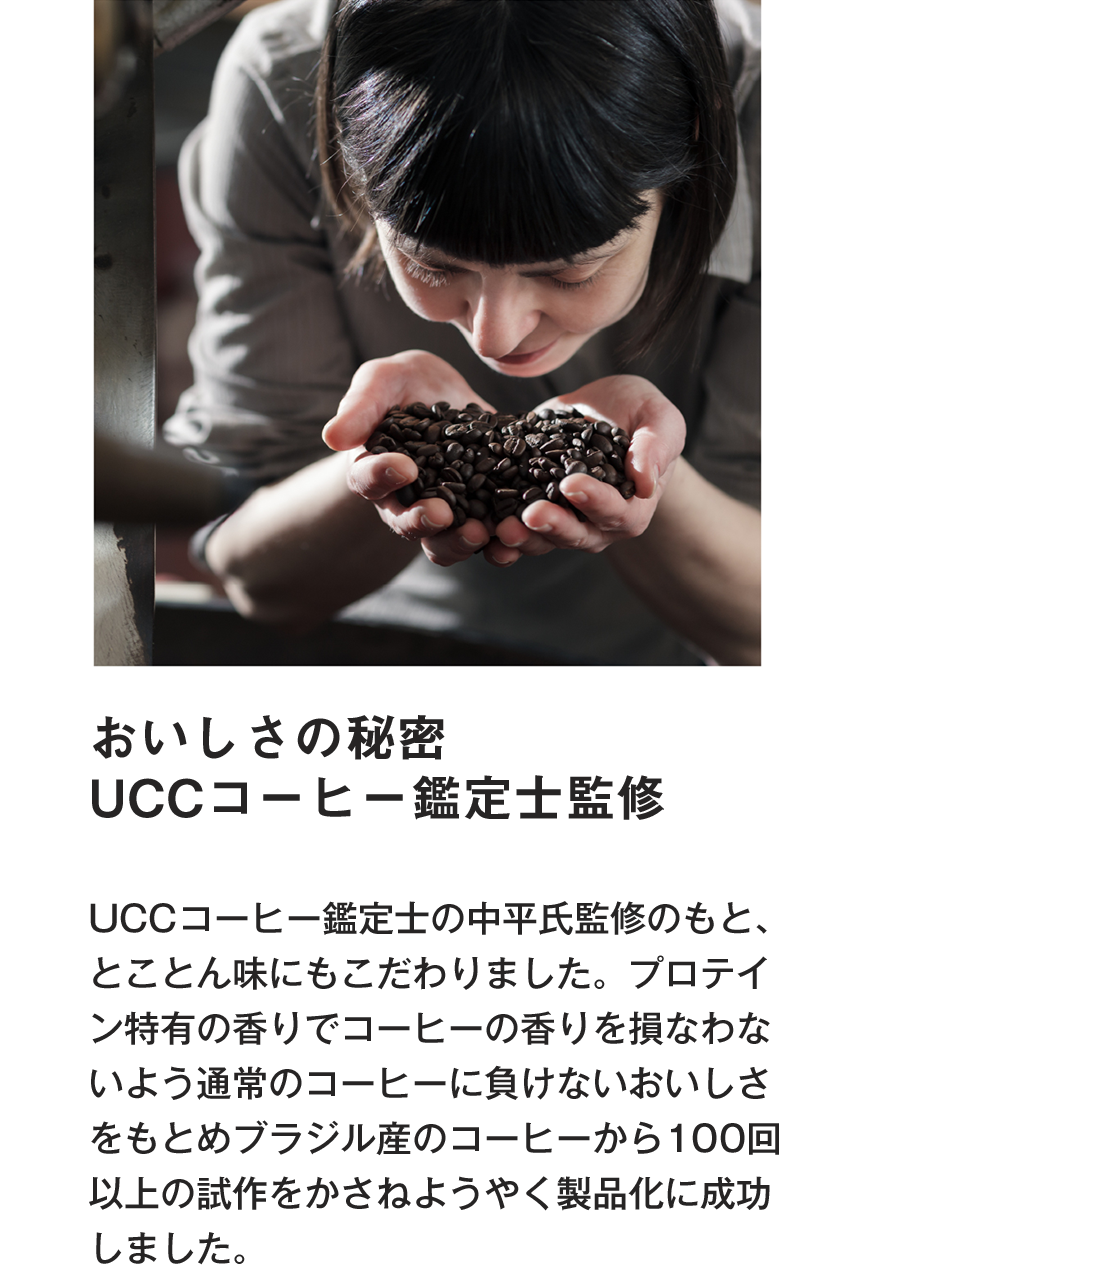 high quality UCCコーヒー鑑定士監修